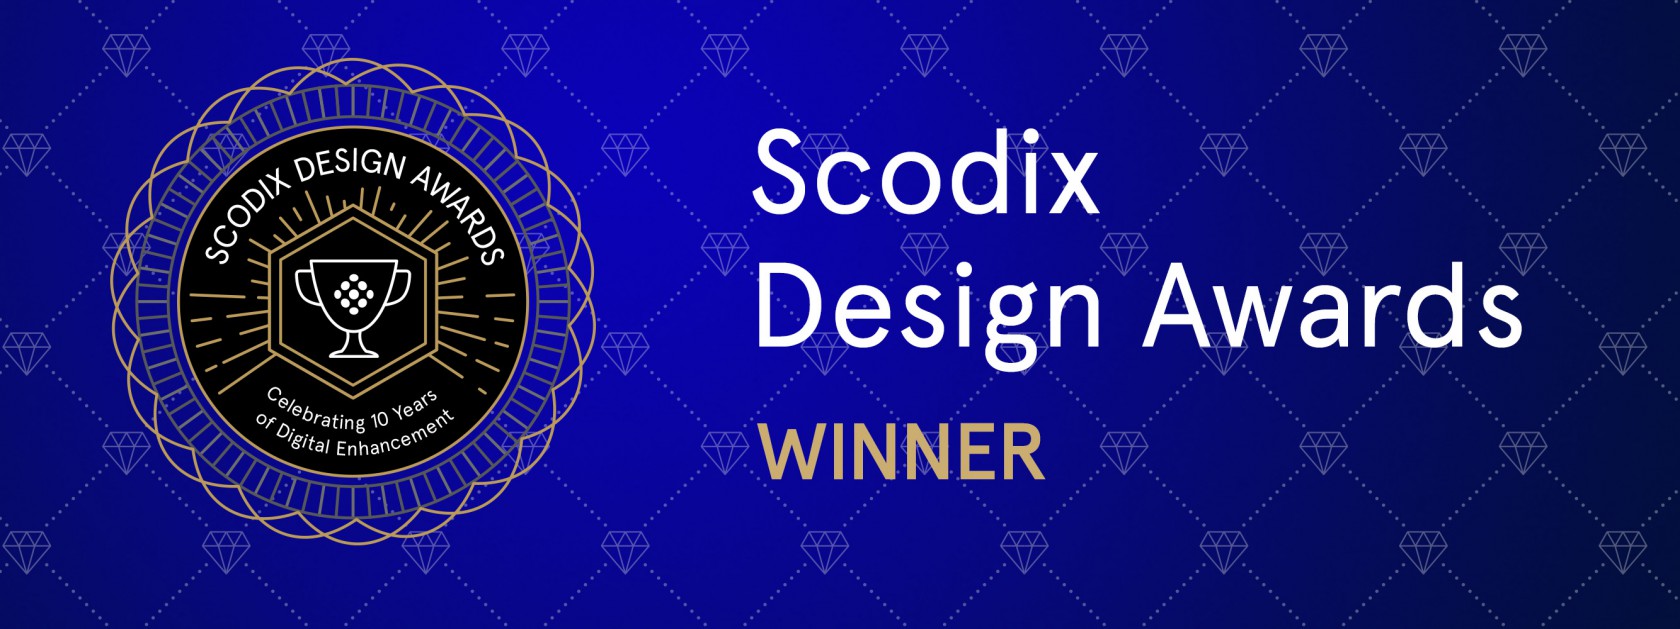 Scodix Design Awards